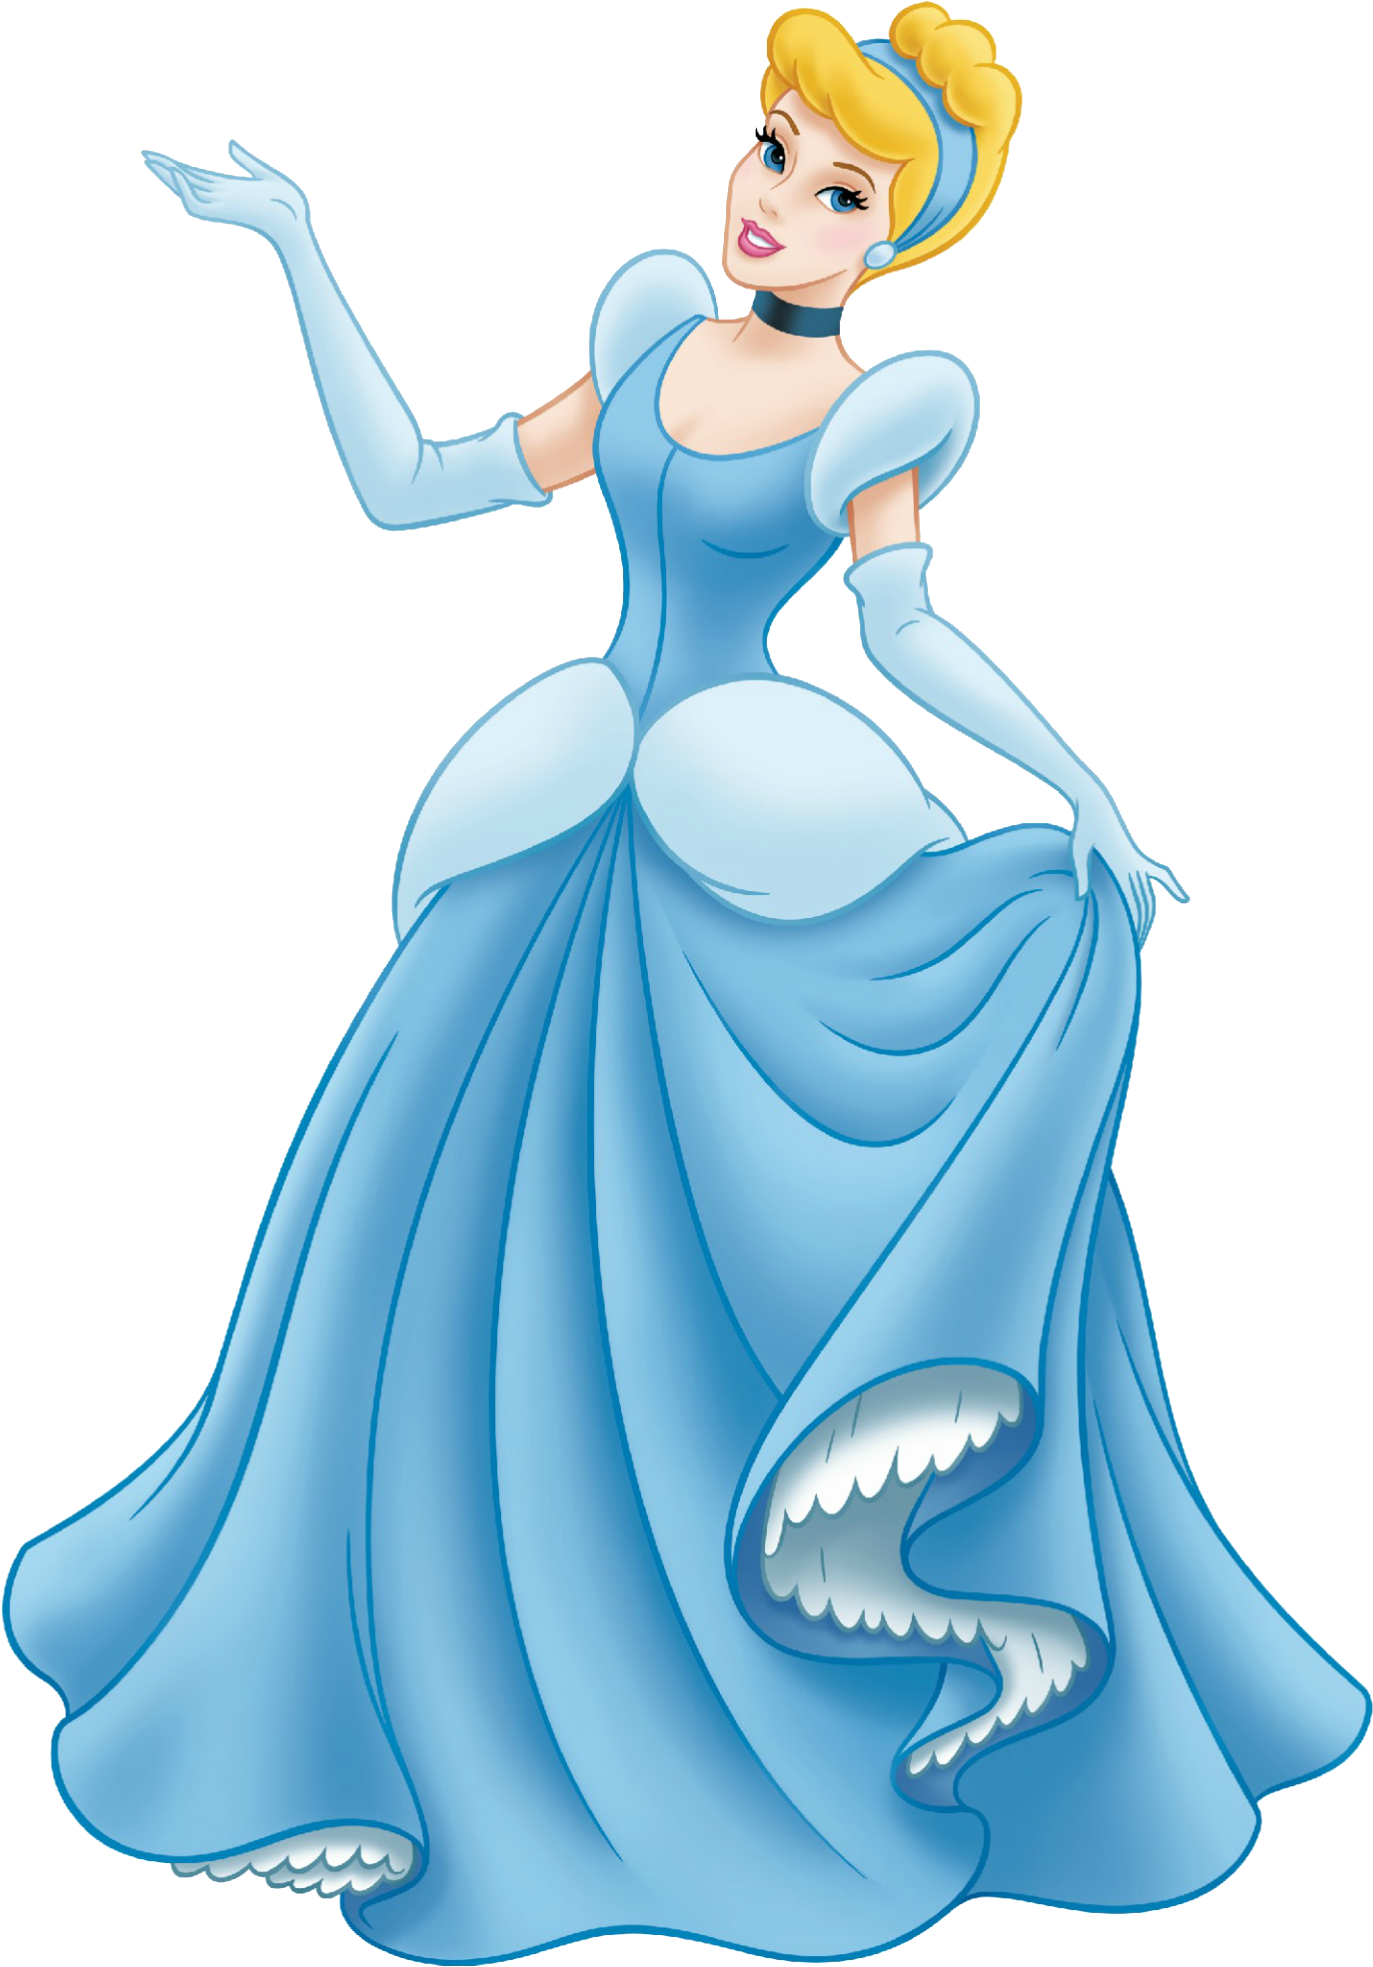 A Cartoon Of A Woman In A Blue Dress